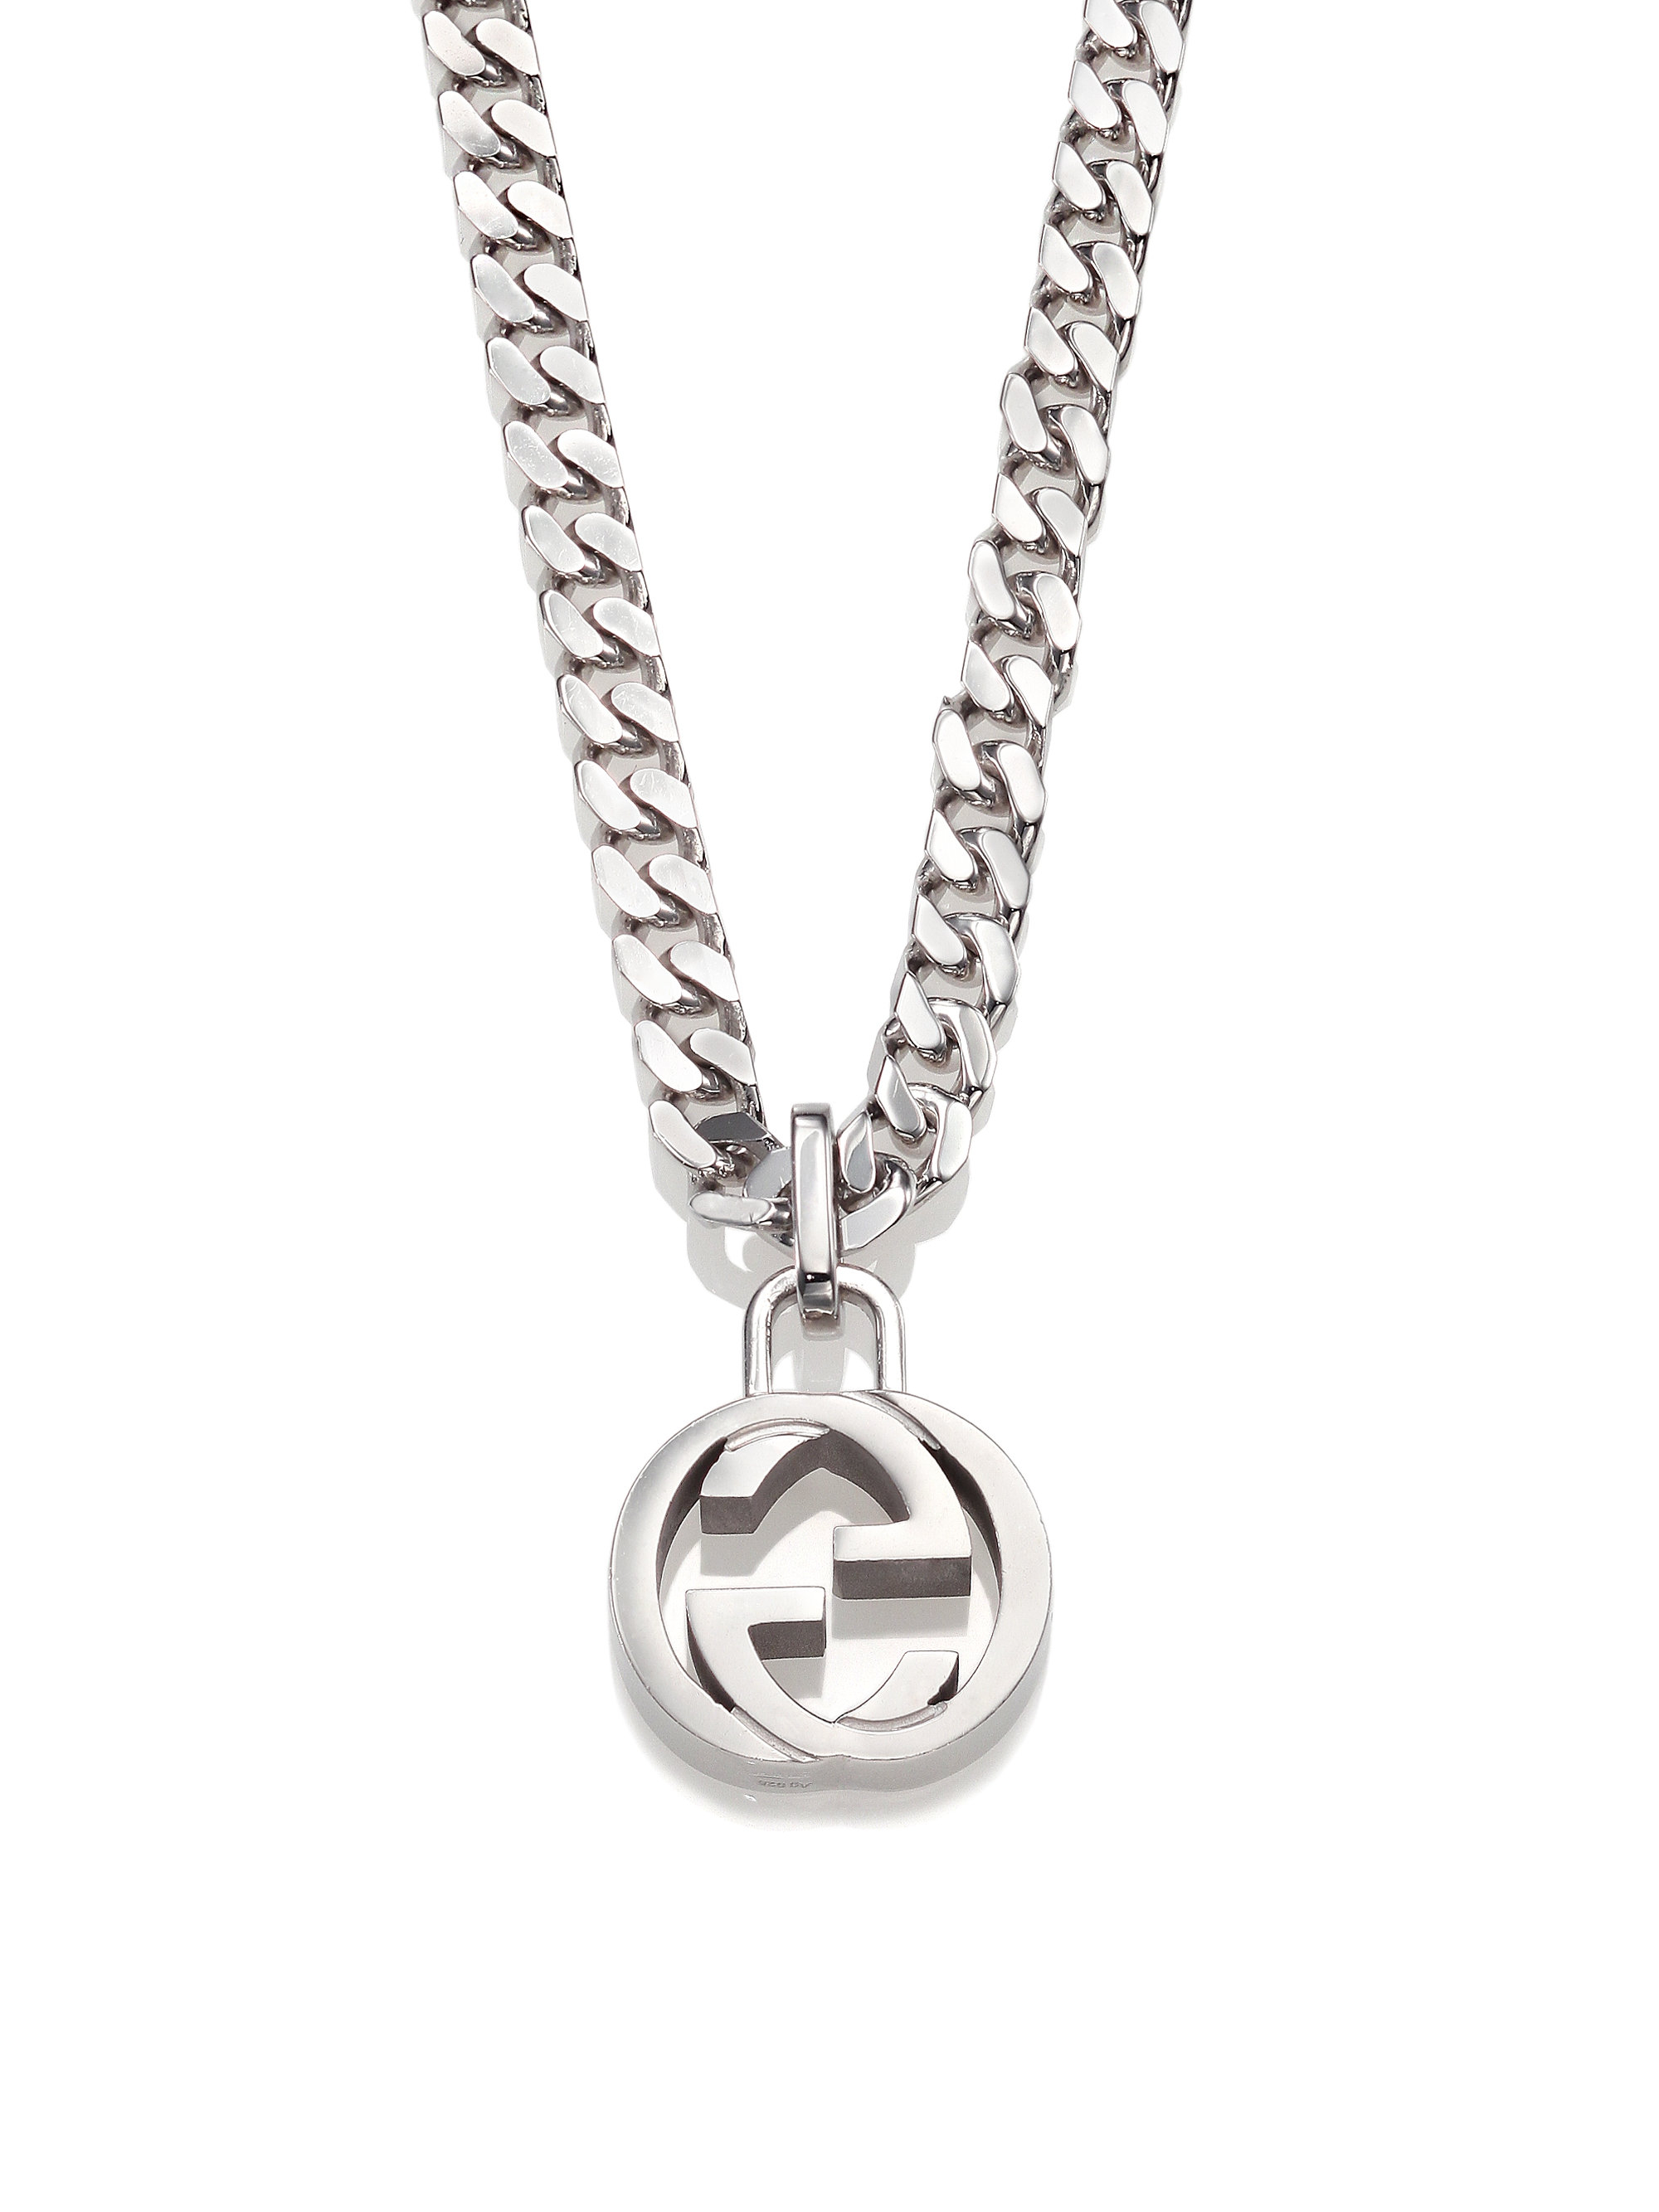 Lyst - Gucci Interlocking Silver Necklace in Metallic for Men